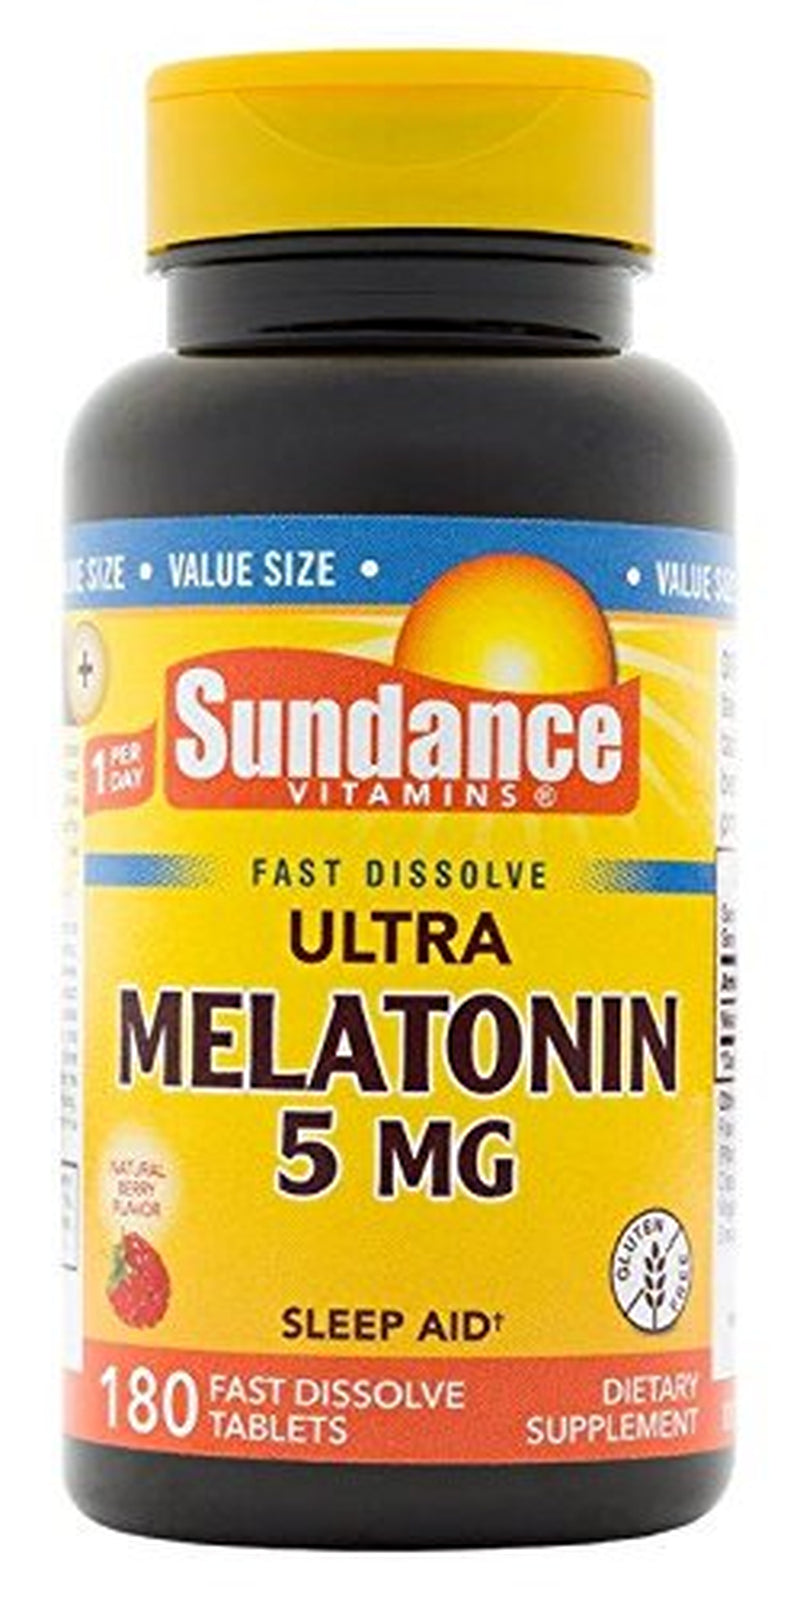 Sundance Ultra 5 Mg Melatonin Fast Dissolve Tablets, 180 Count, 2 Pack